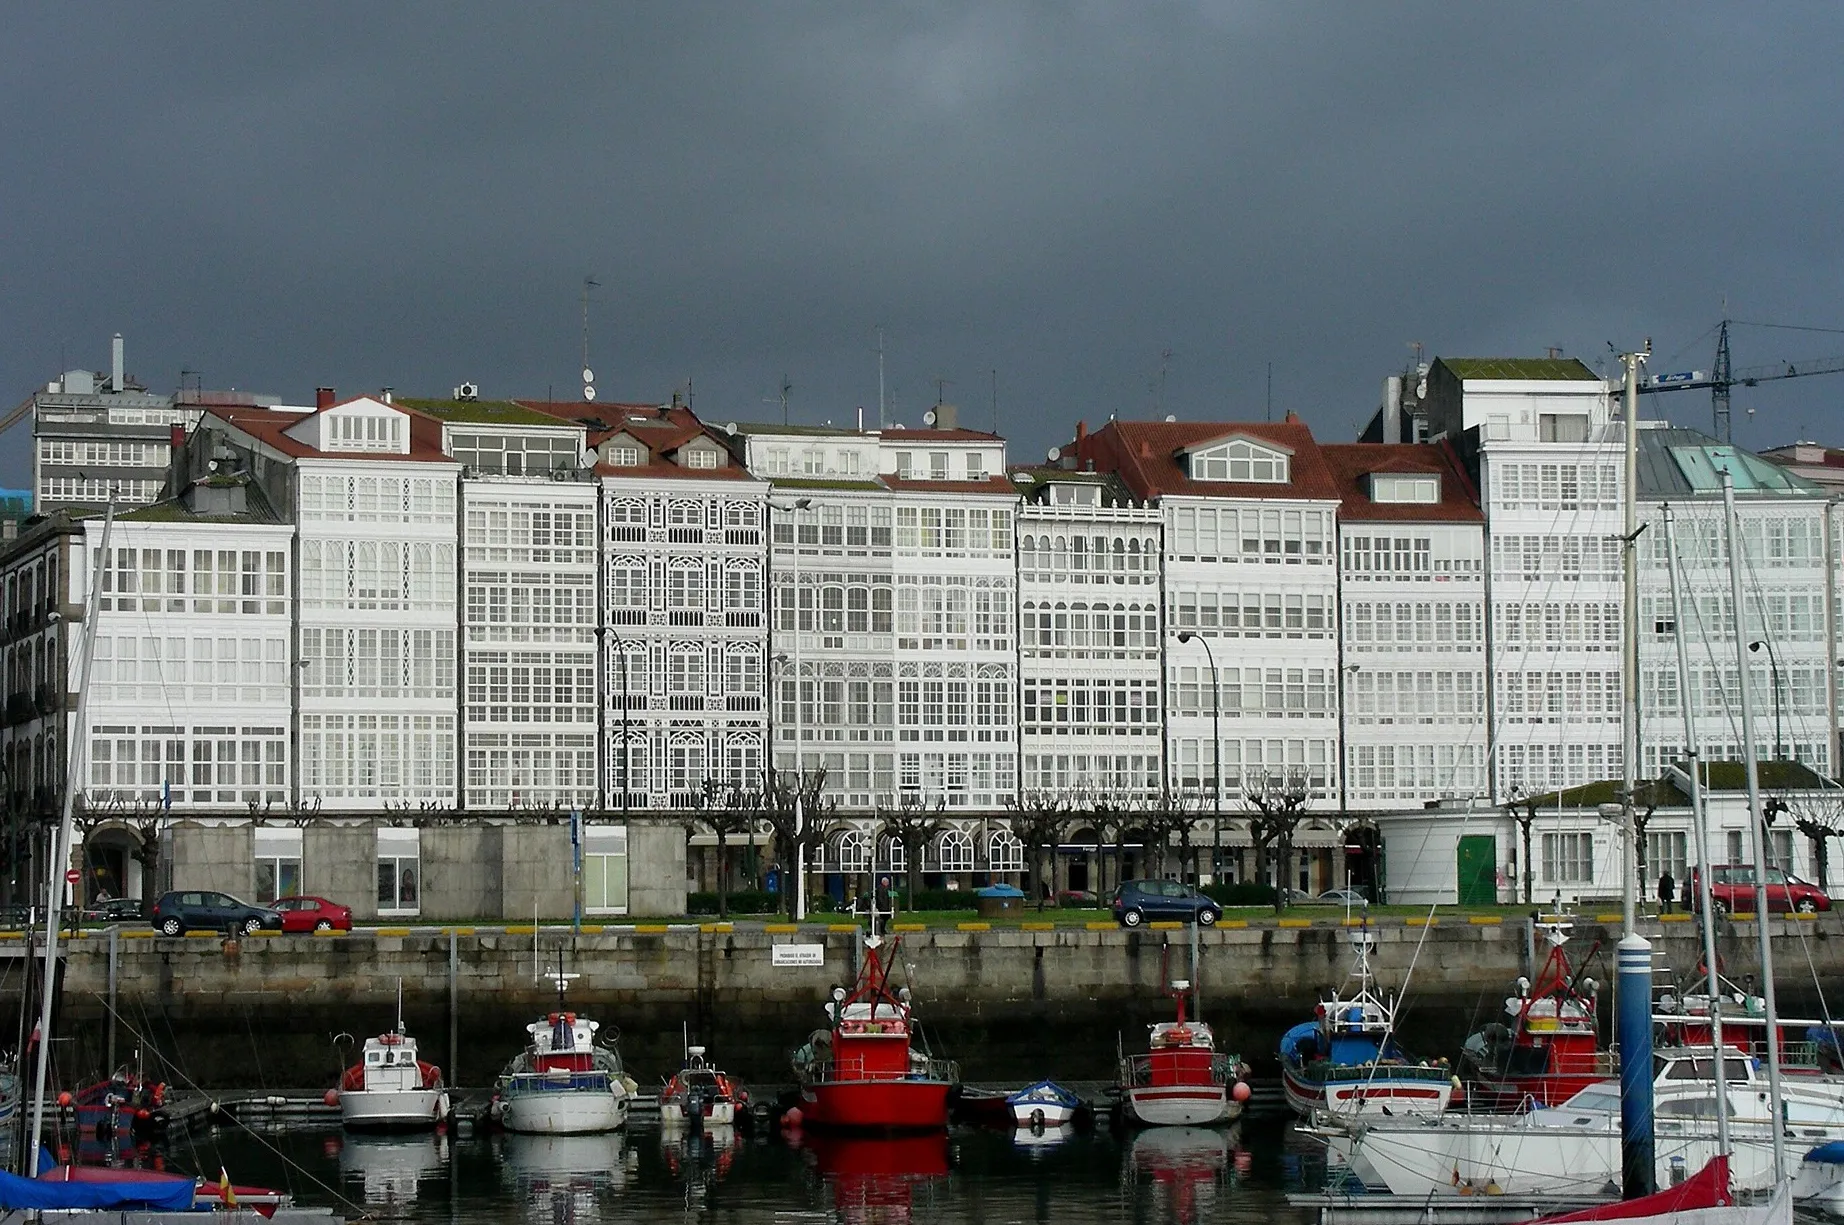 A Coruña, the city of glass